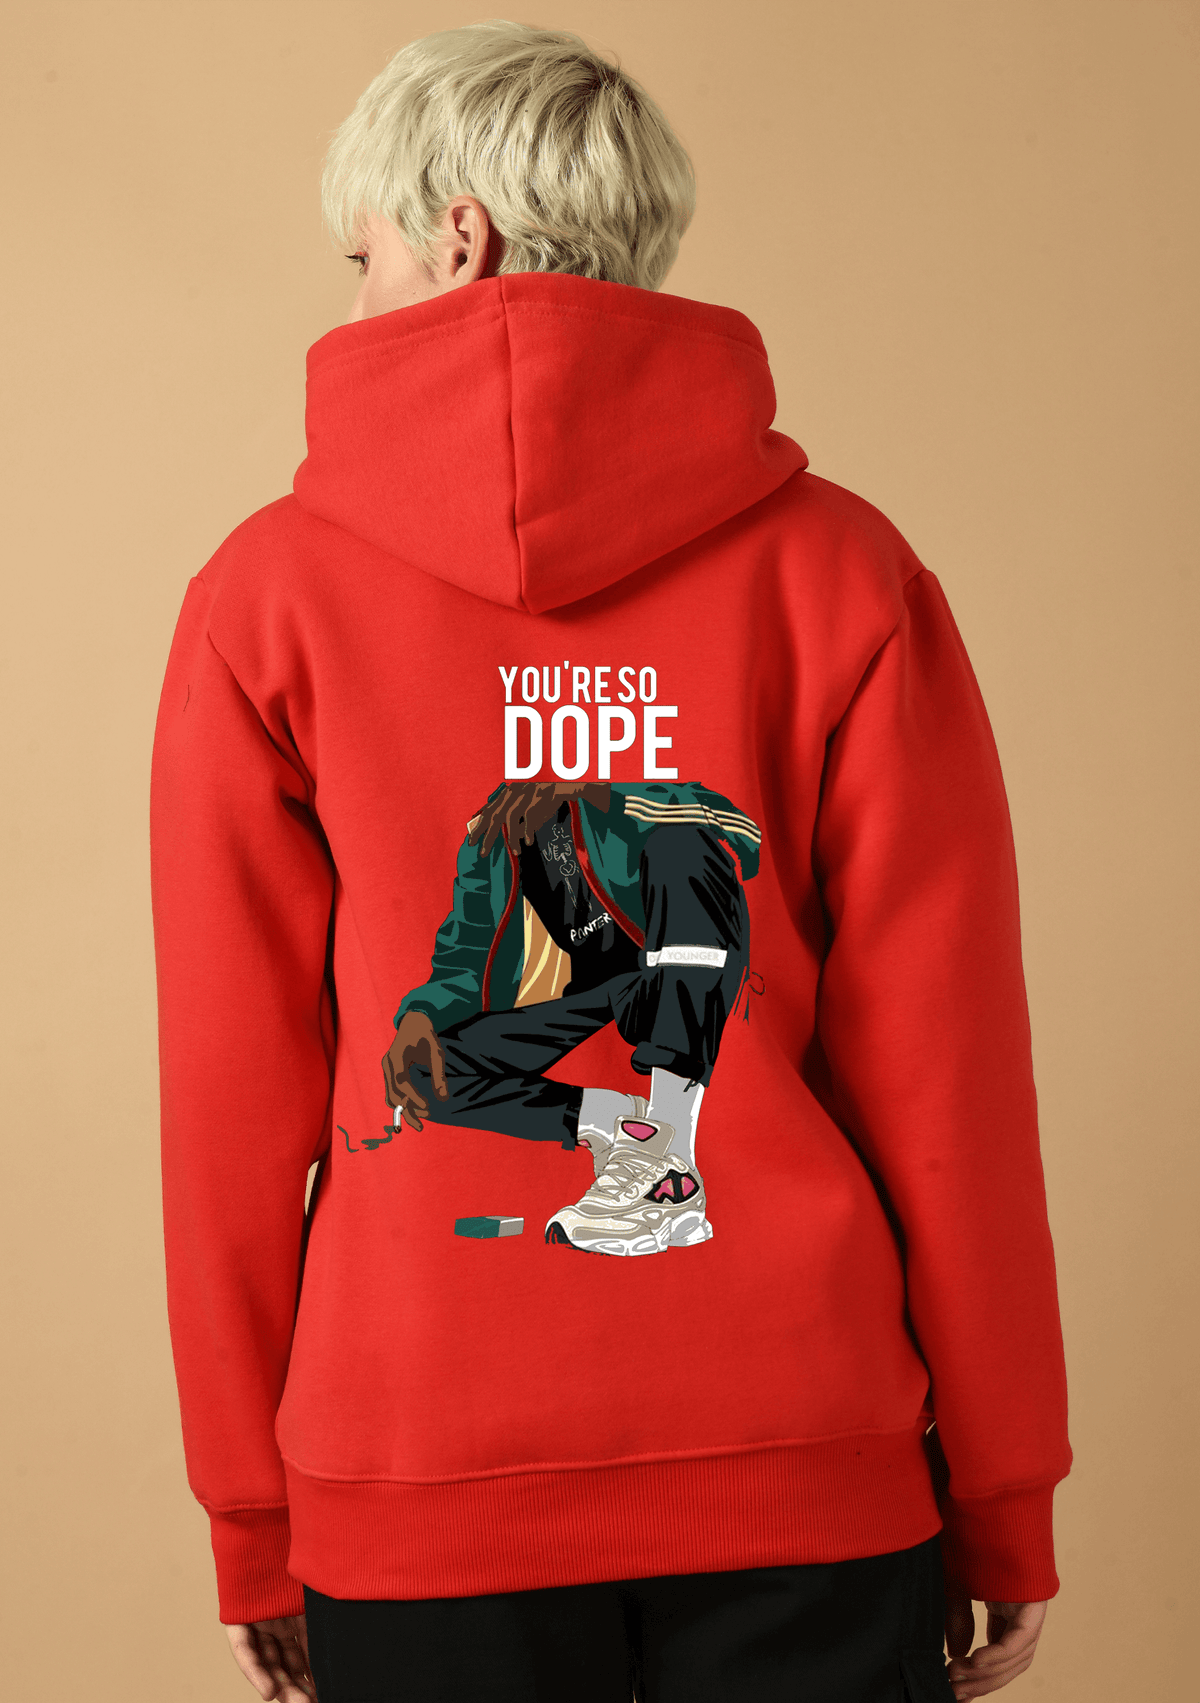 Dope printed red hoodie by offmint